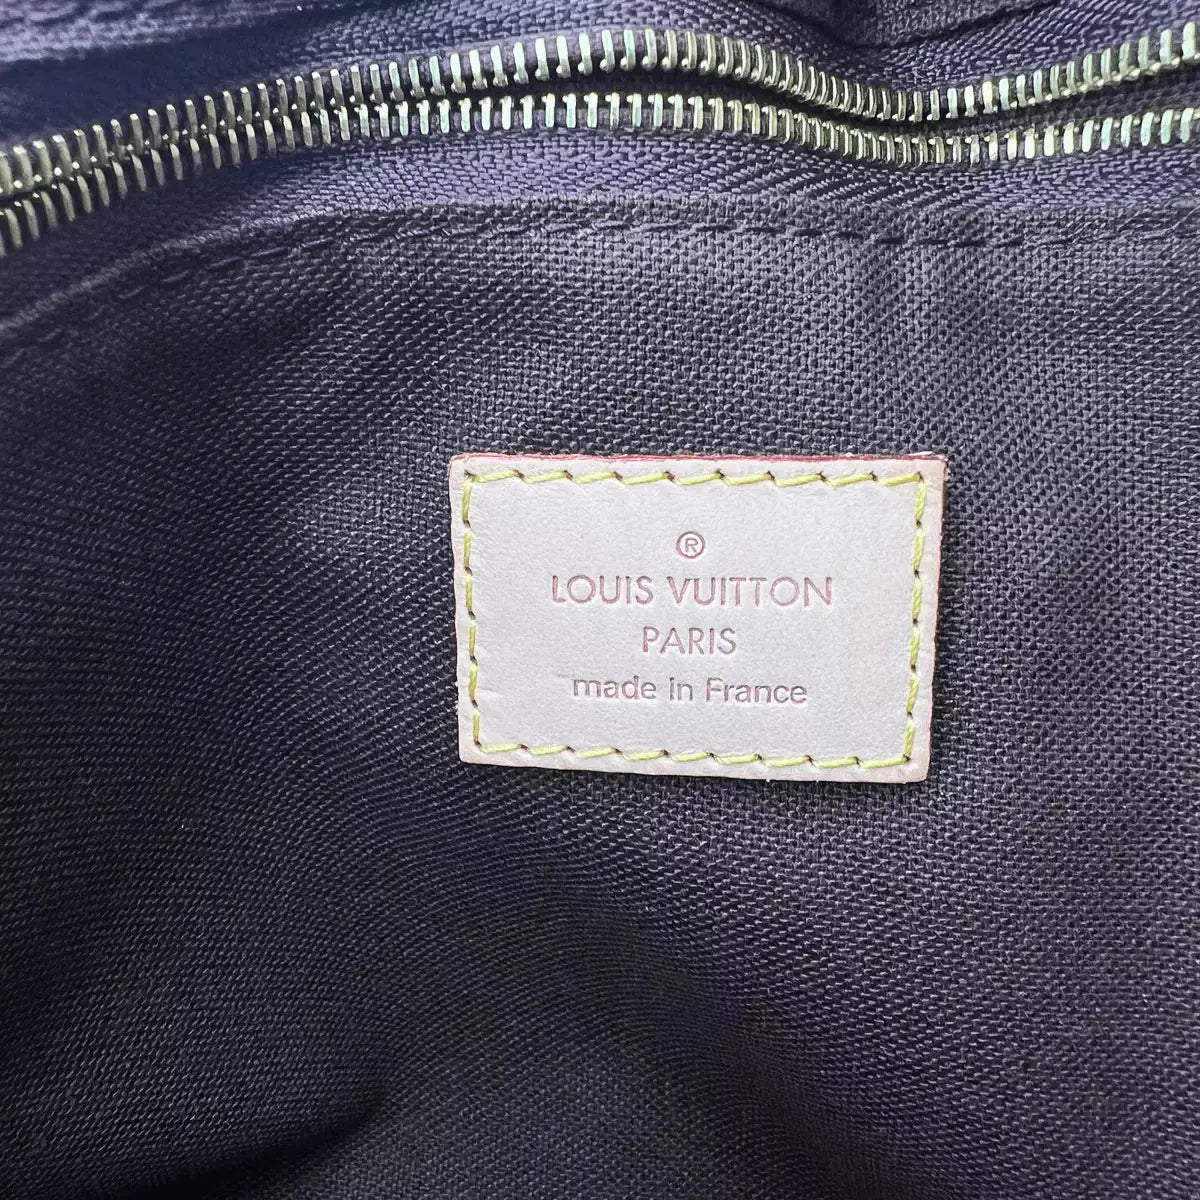 Update On My Louis Vuitton Menilmontant Pm